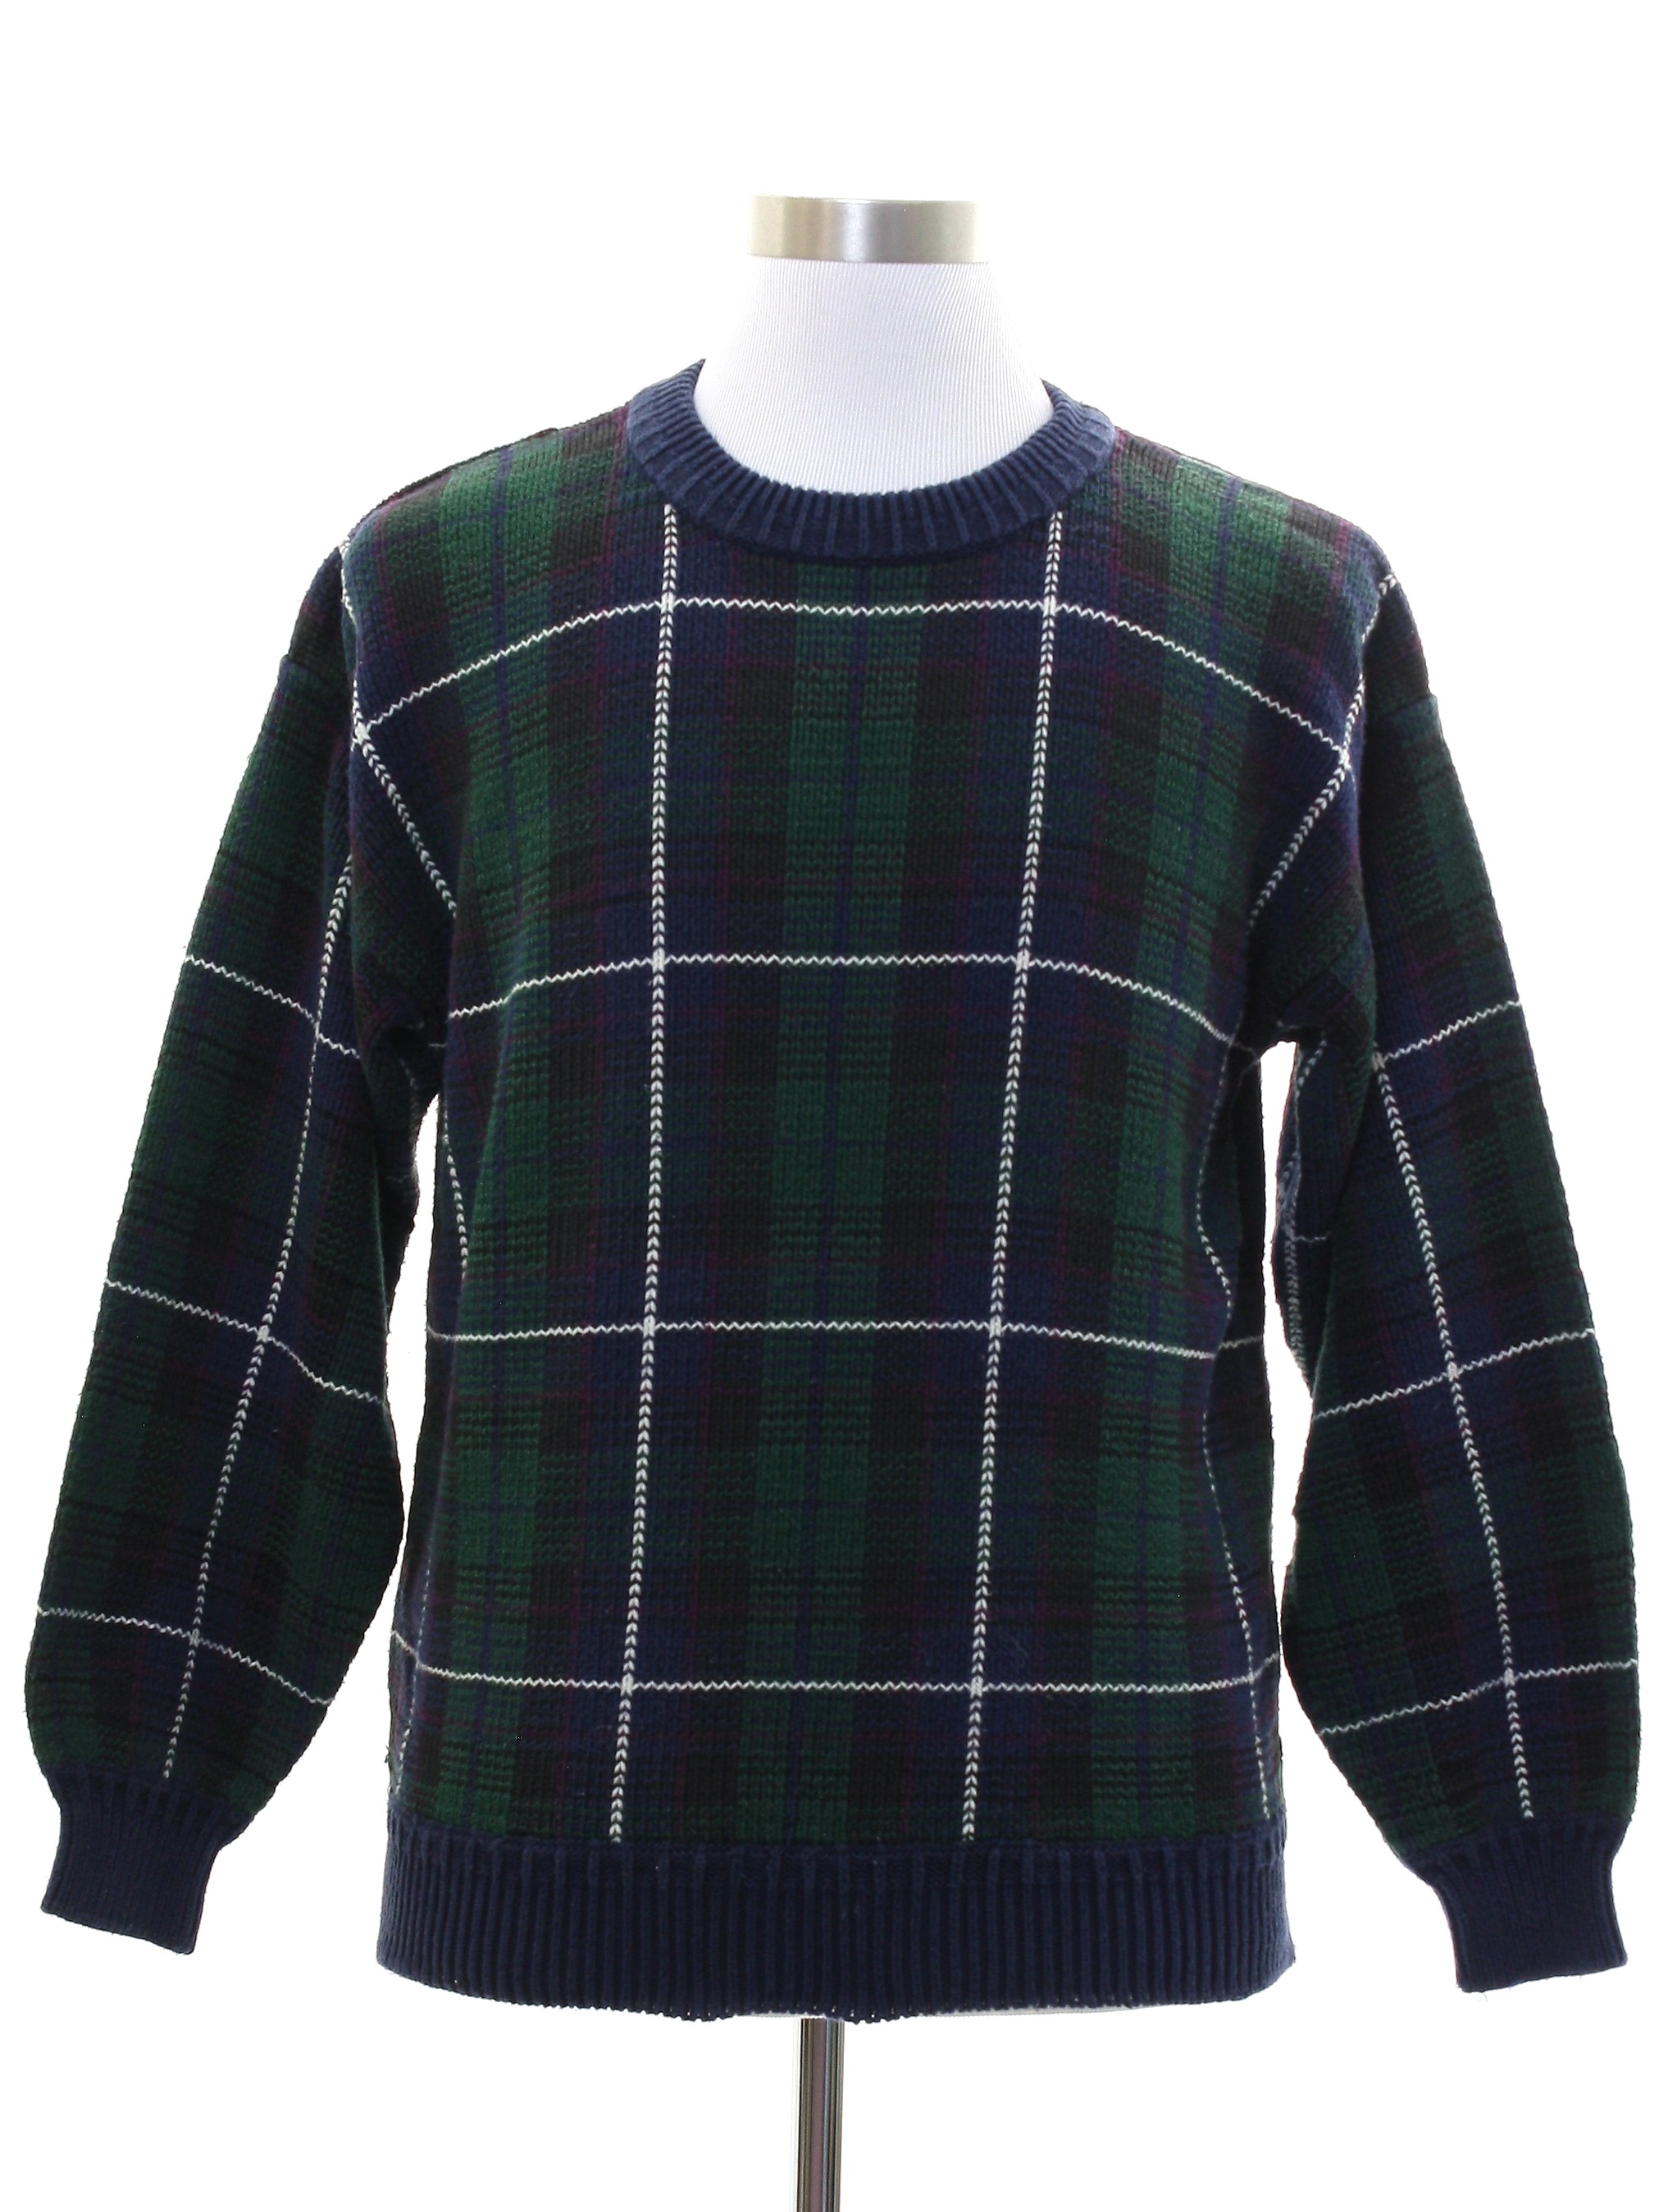 Retro 80s Sweater (John Ashford) : Late 80s or Early 90s -John Ashford ...